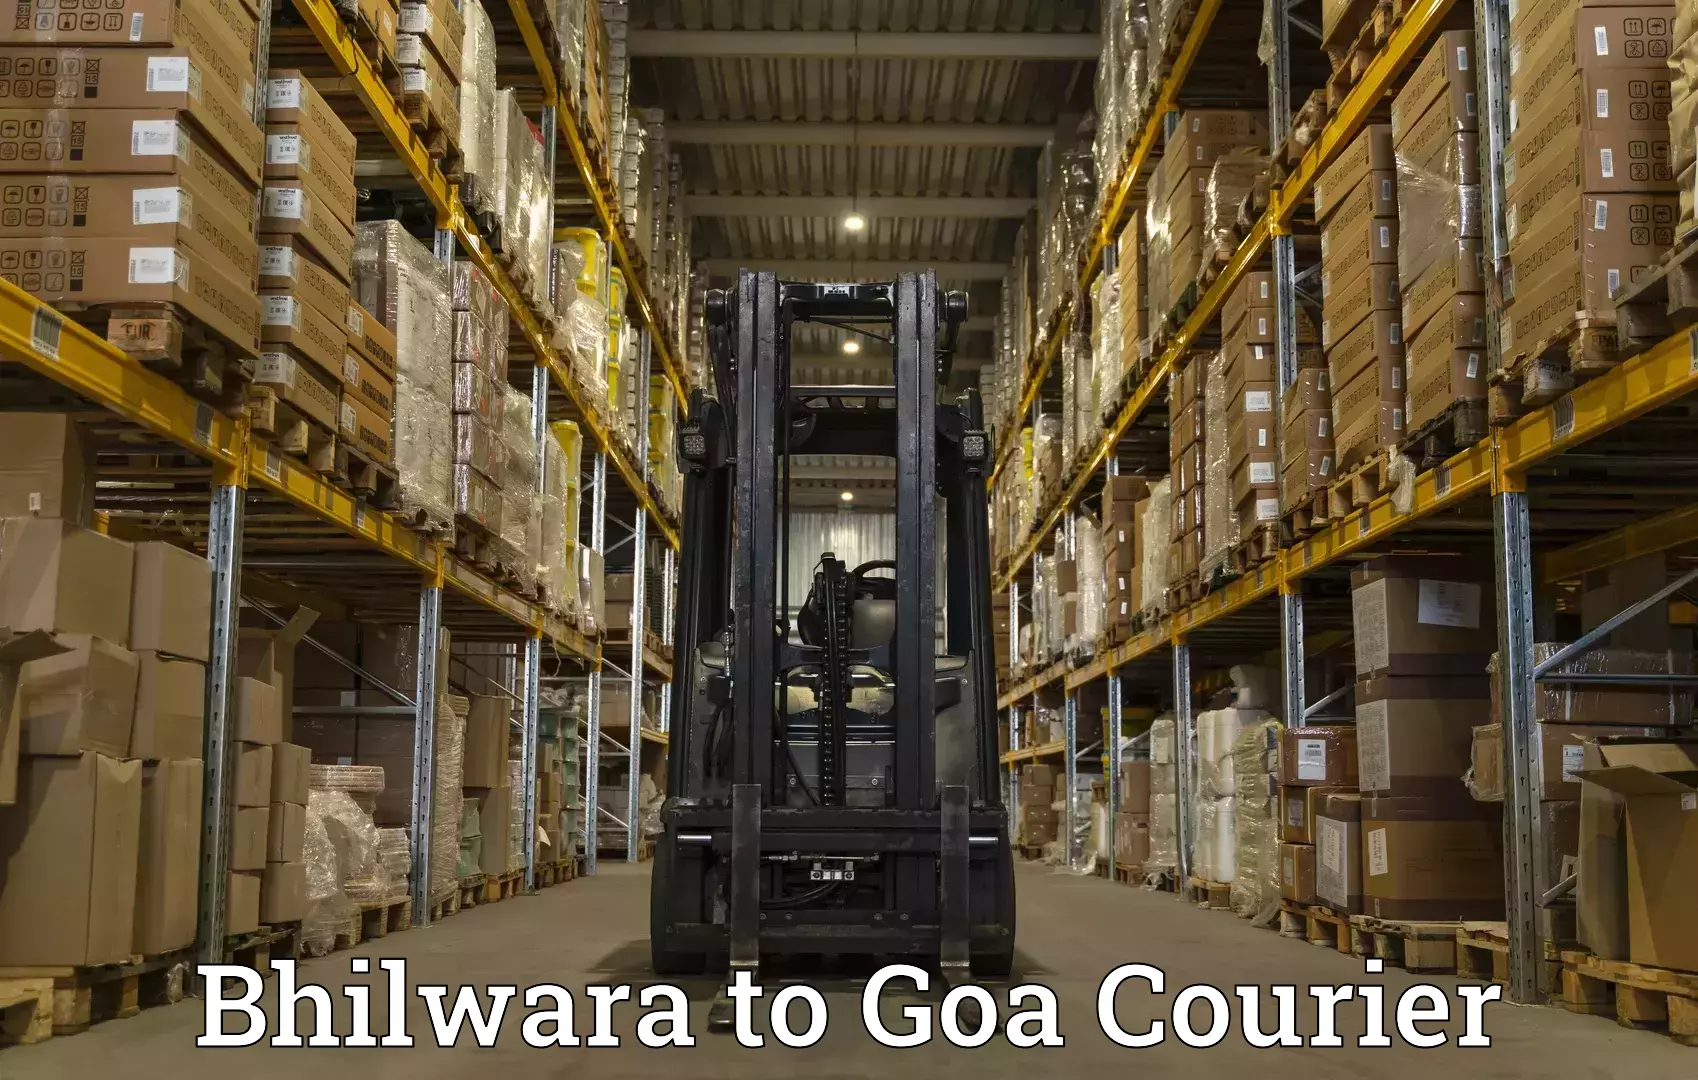 Express delivery network Bhilwara to South Goa